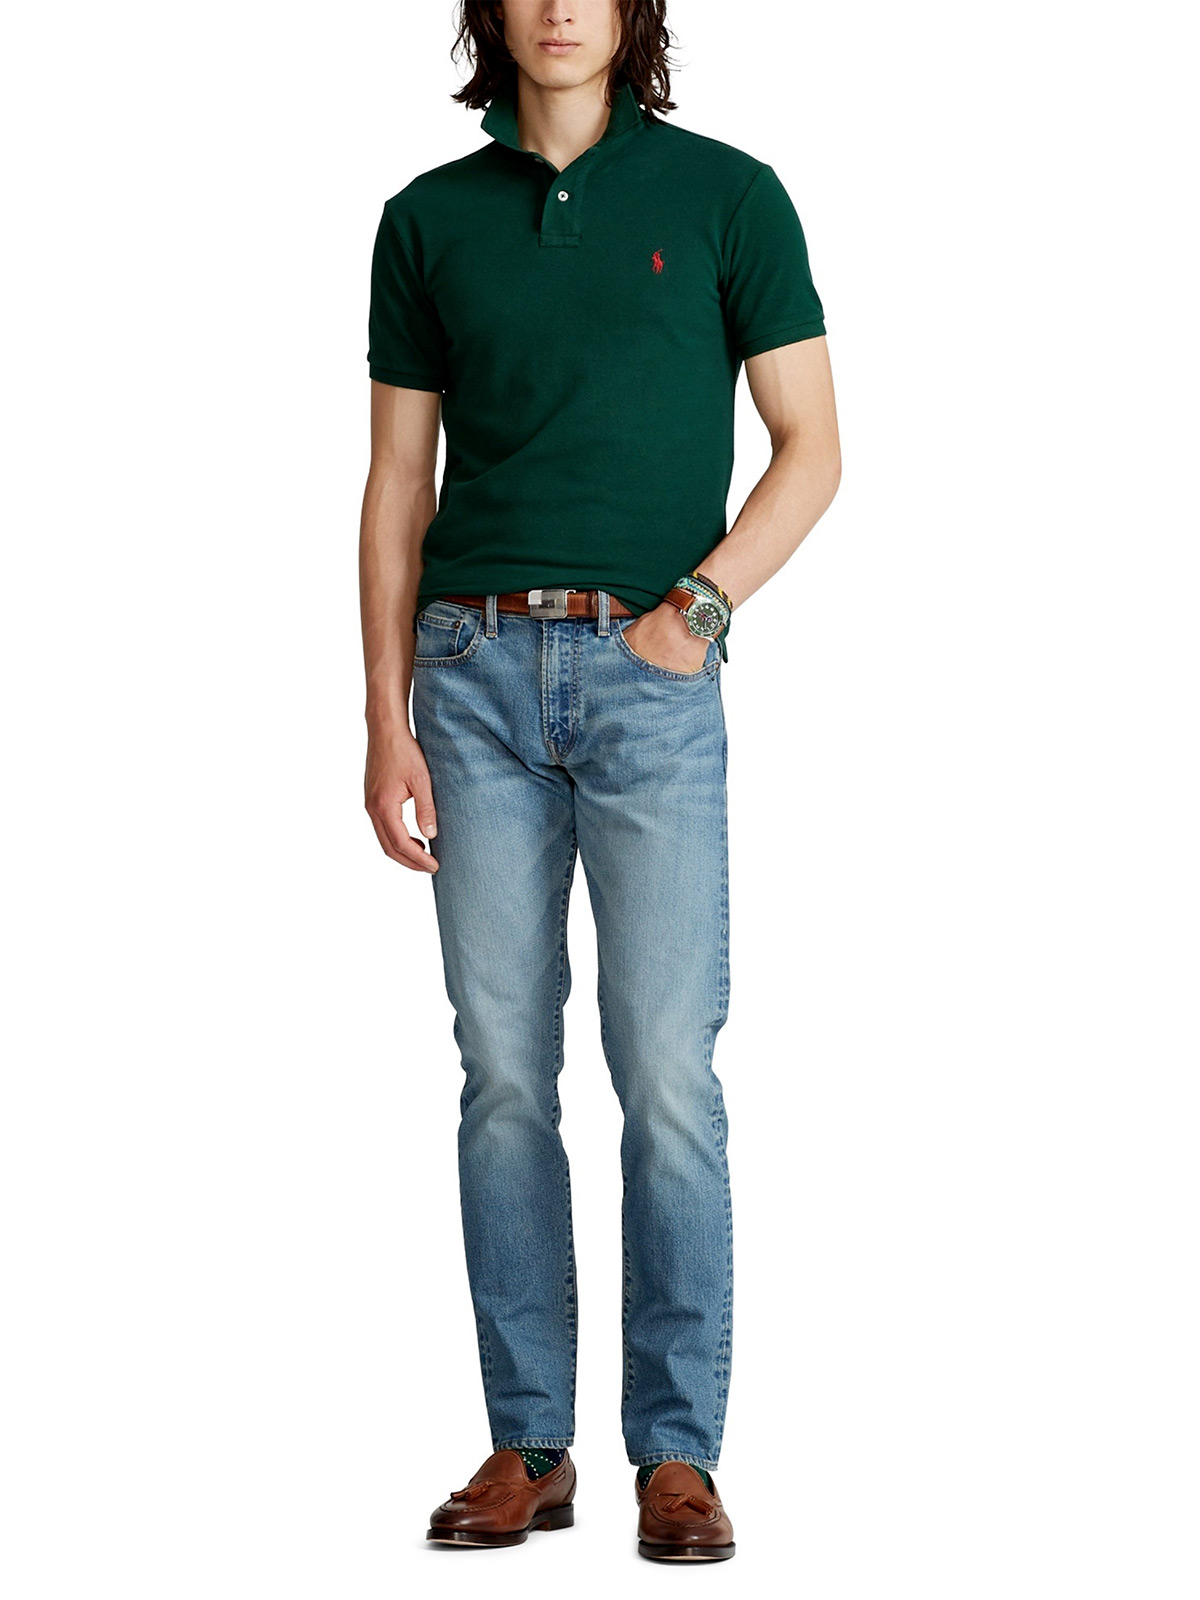 POLO RALPH LAUREN Men's Slim Fit Polo Shirt College Green ...